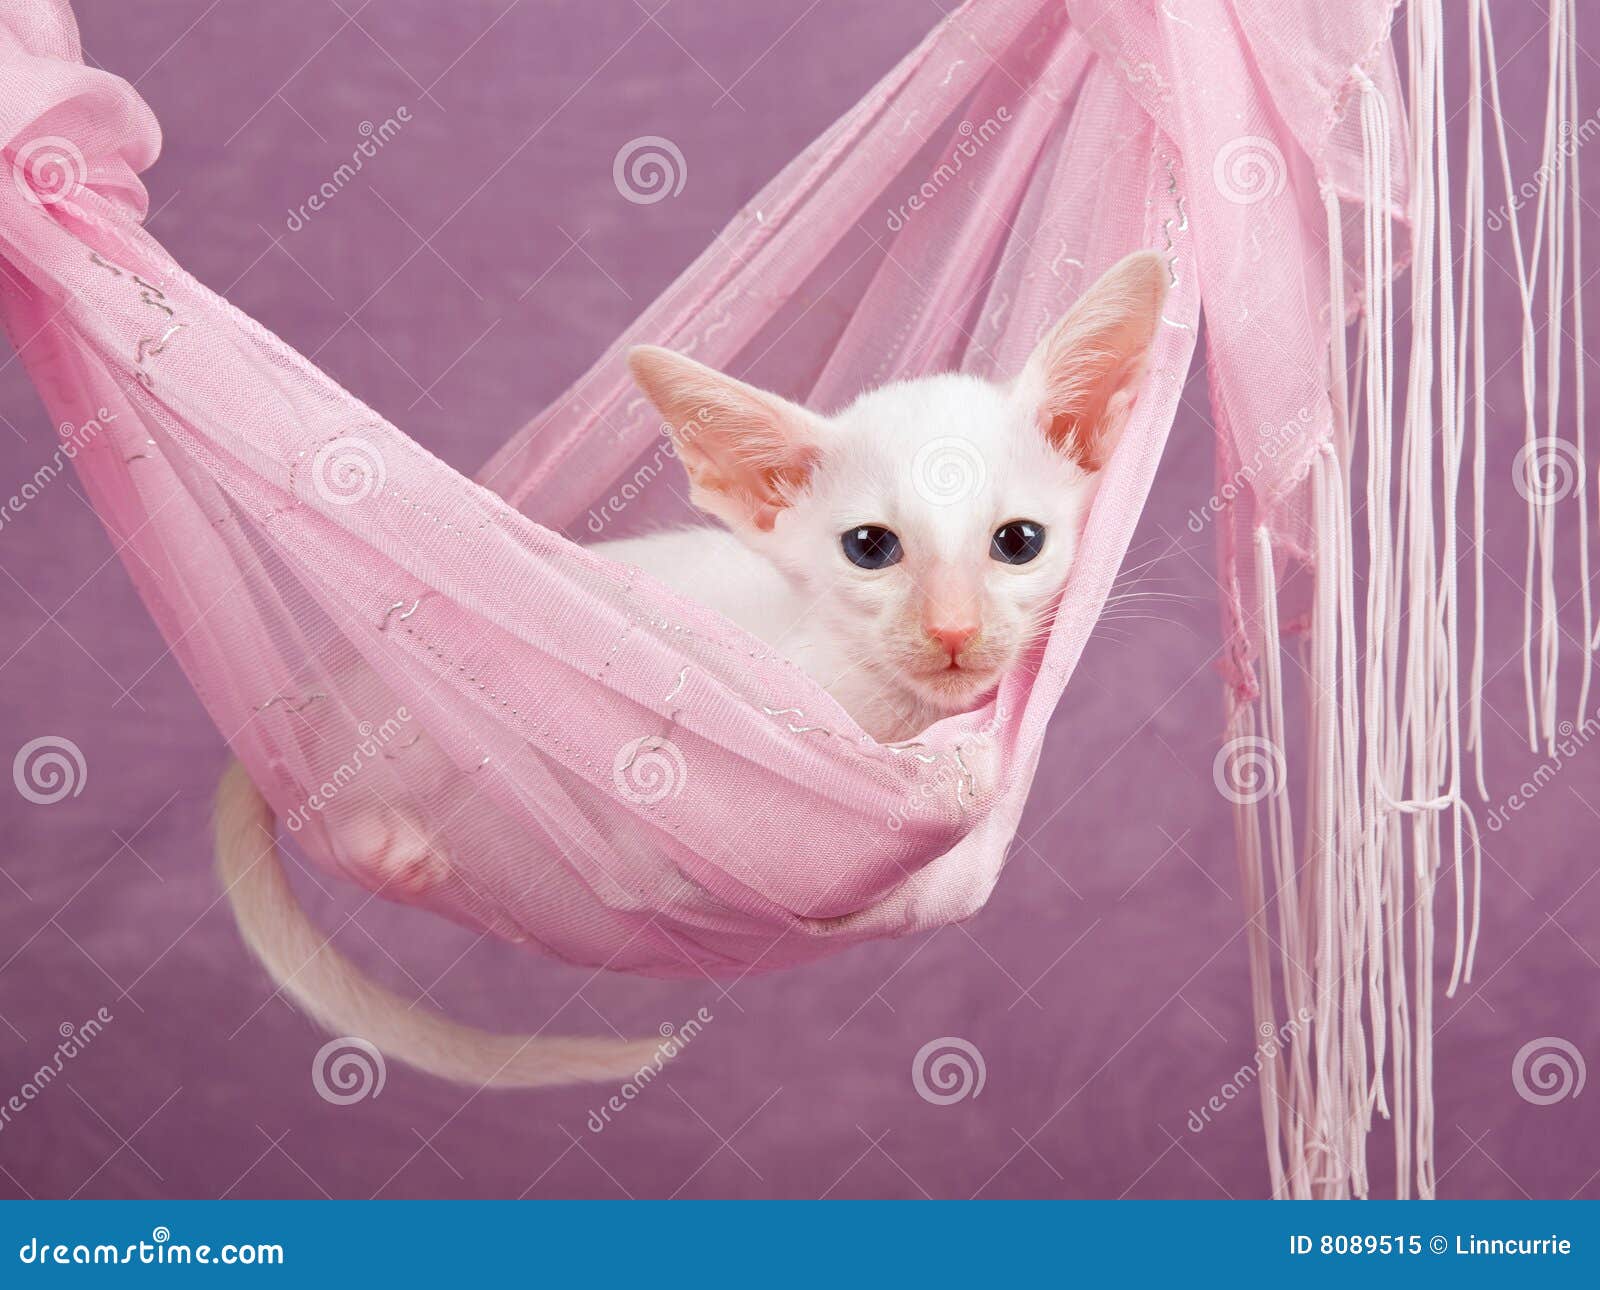 Pink Kitten Hammock 109